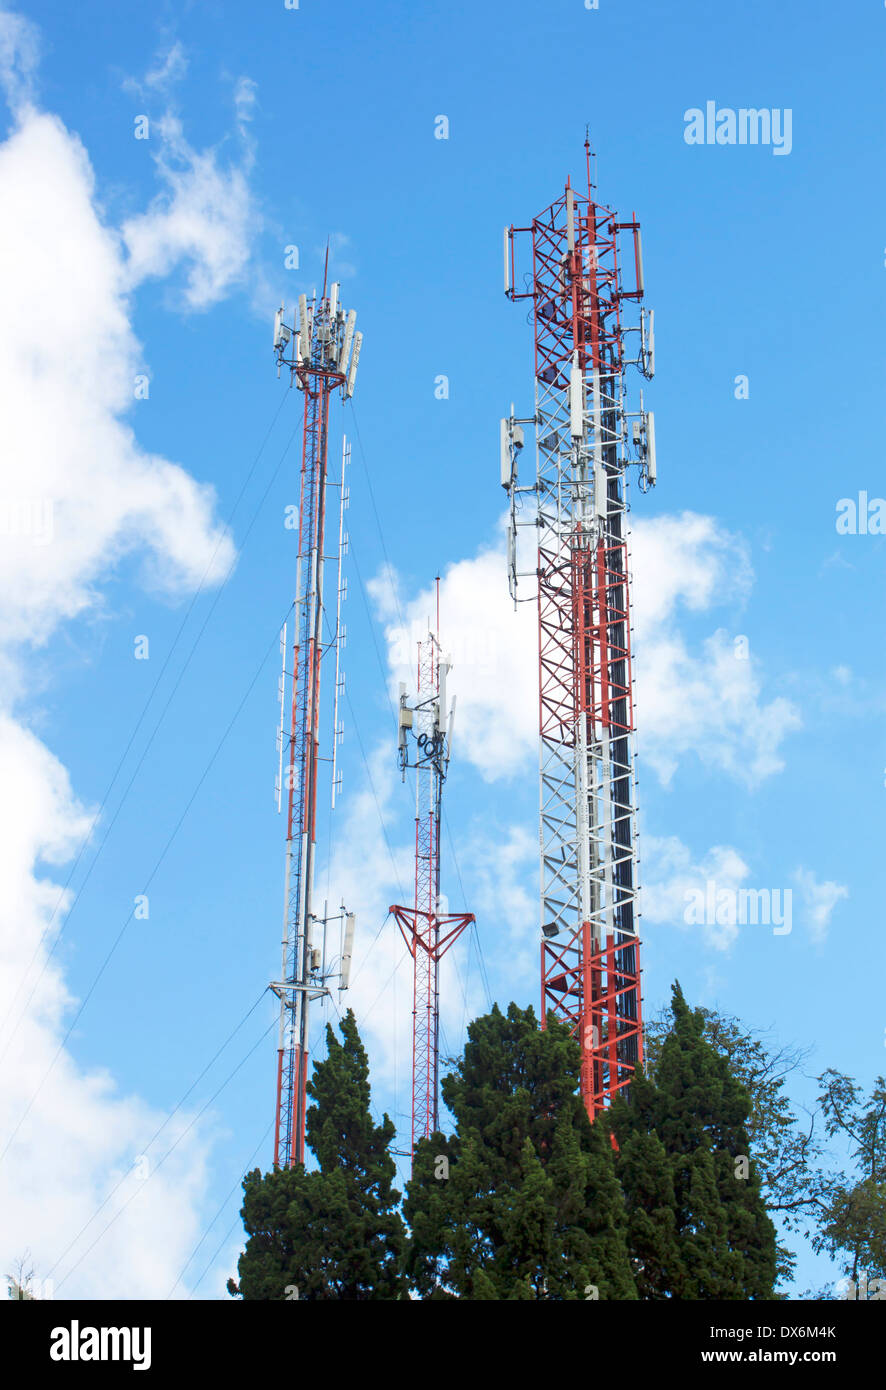 Communication tower radio mast signal and the sky dark. Stock Photo